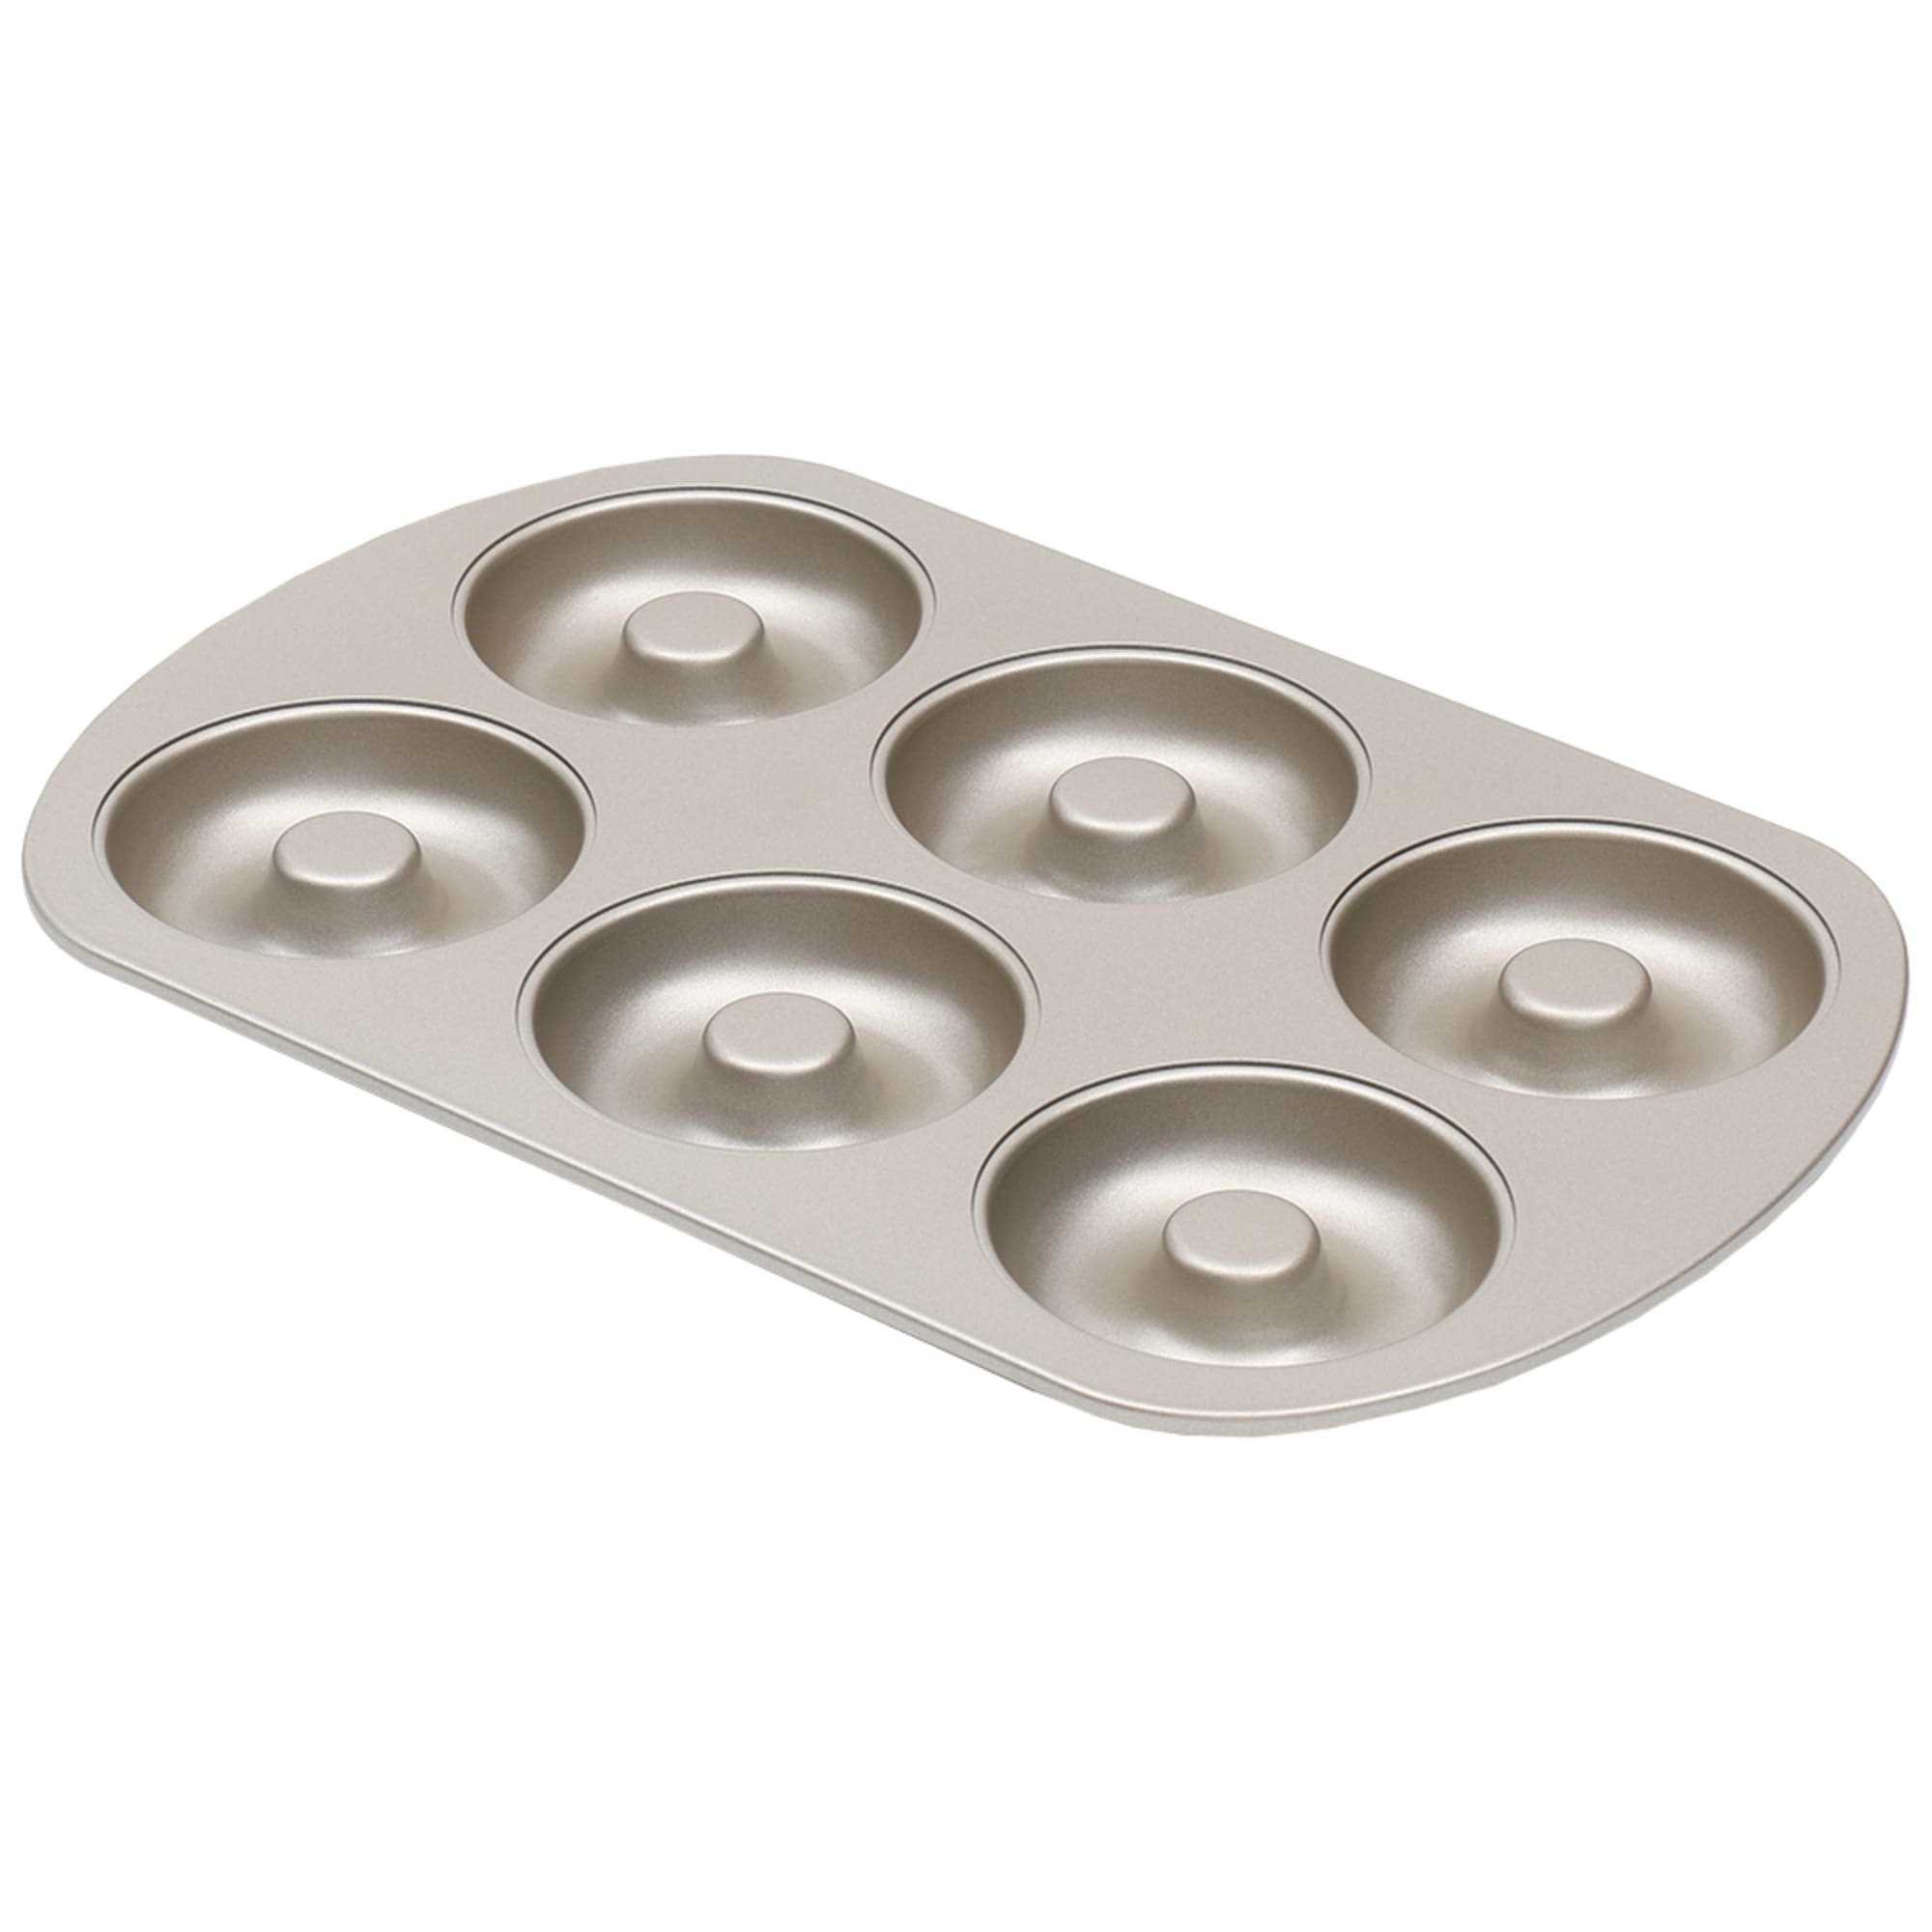 Home Basics Aurelia Non-Stick 6-Cavity Carbon Steel Donut Pan, Gold
 $8.00 EACH, CASE PACK OF 12